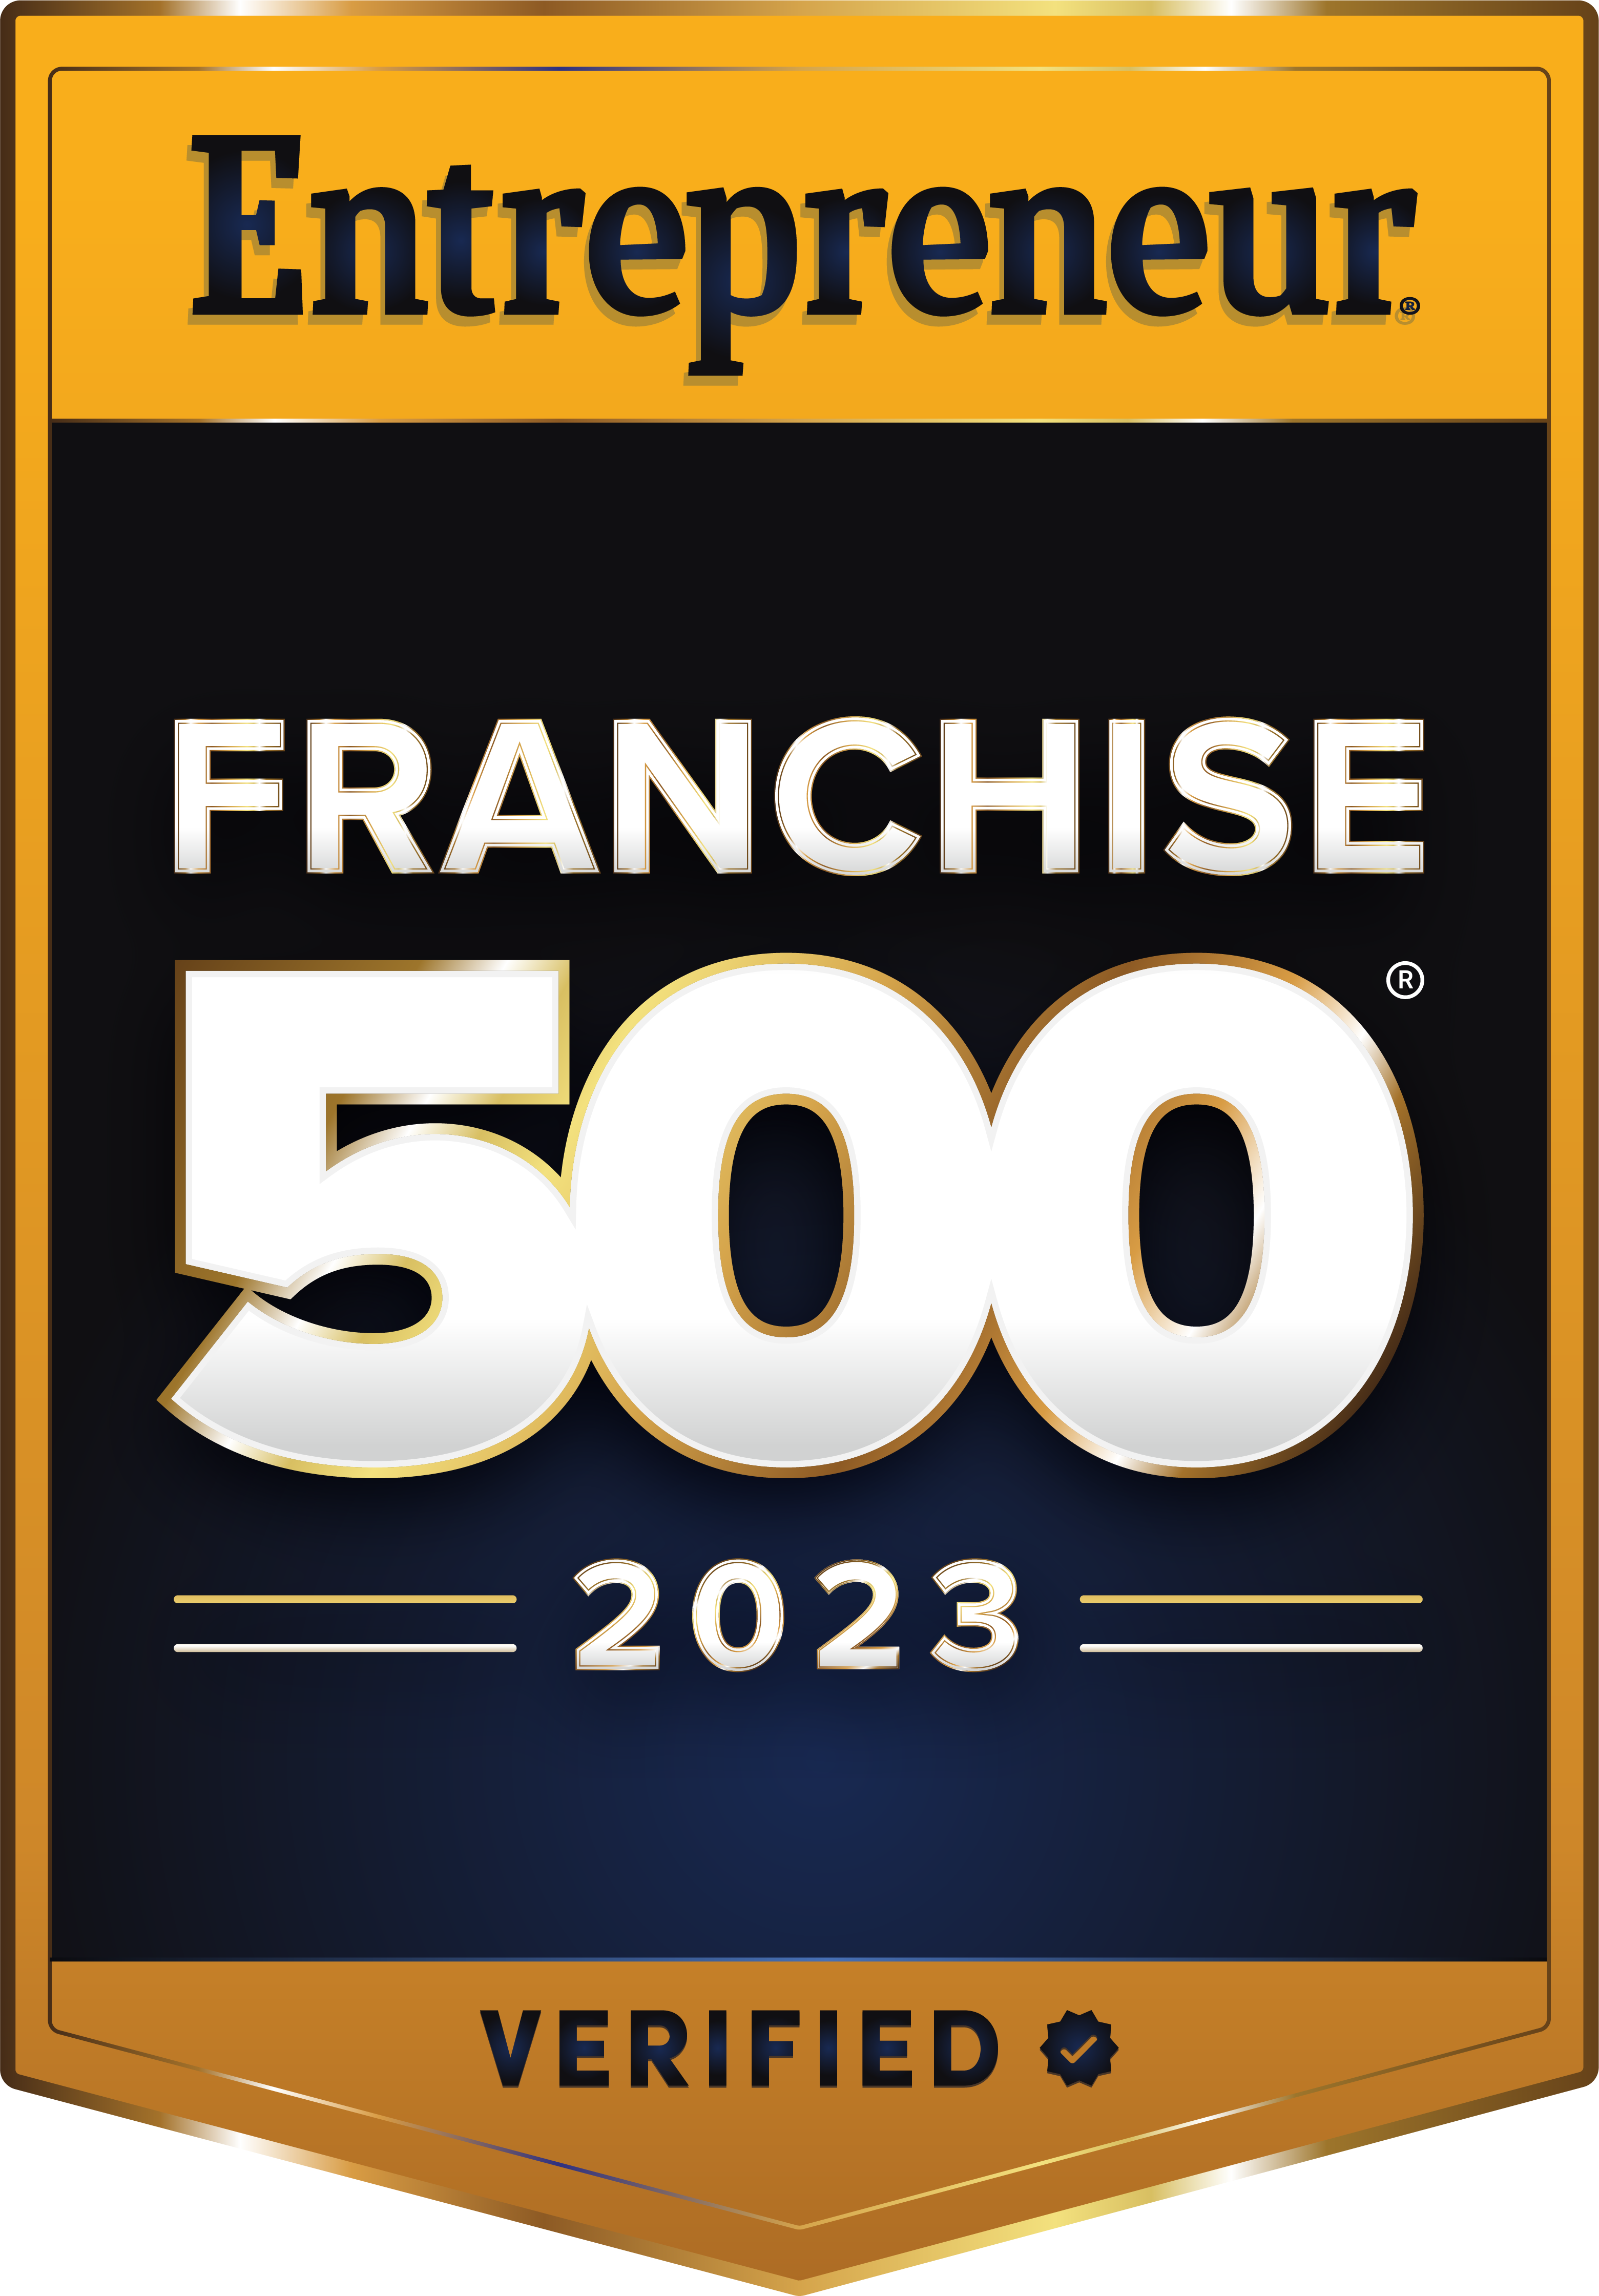 Pillar To Post franchise 500 badge